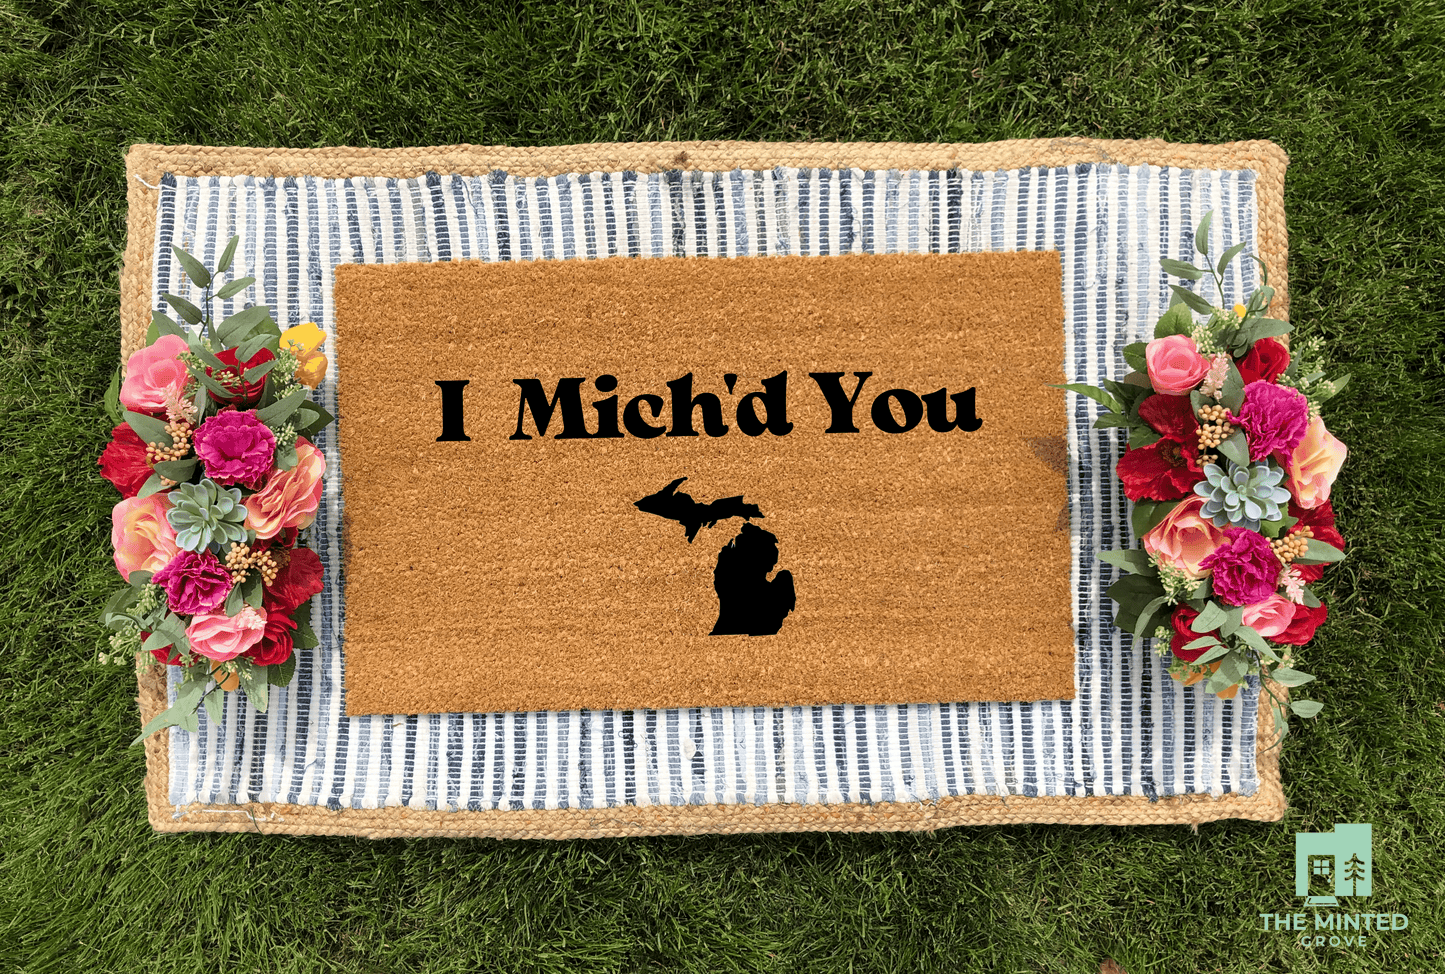 I Mich'd You - Michigan Doormat - The Minted Grove